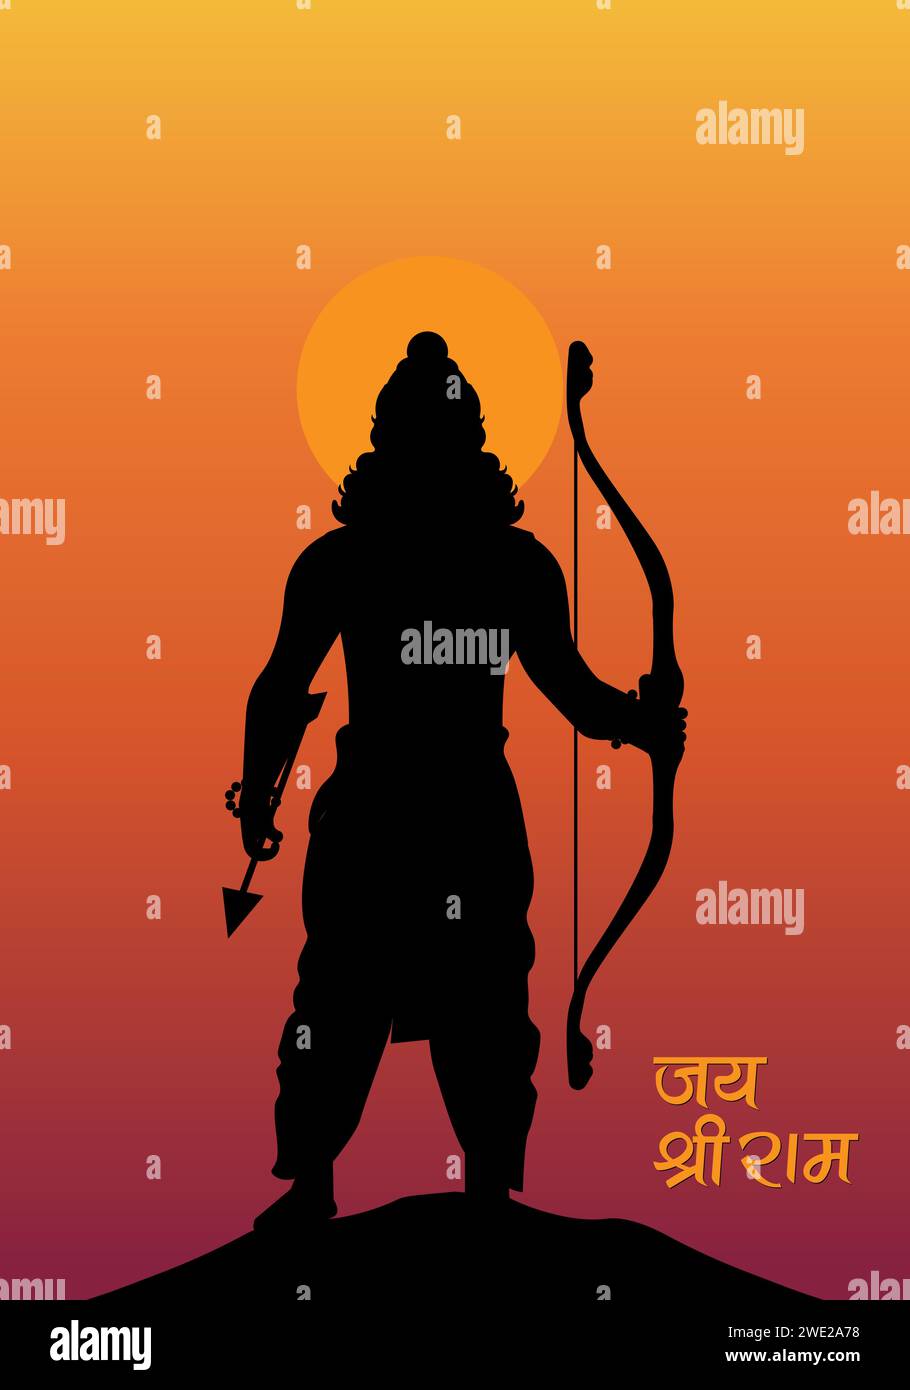 lord Shri Ram Shadow avec vecteur de texte Jai Shree Ram Illustration de Vecteur